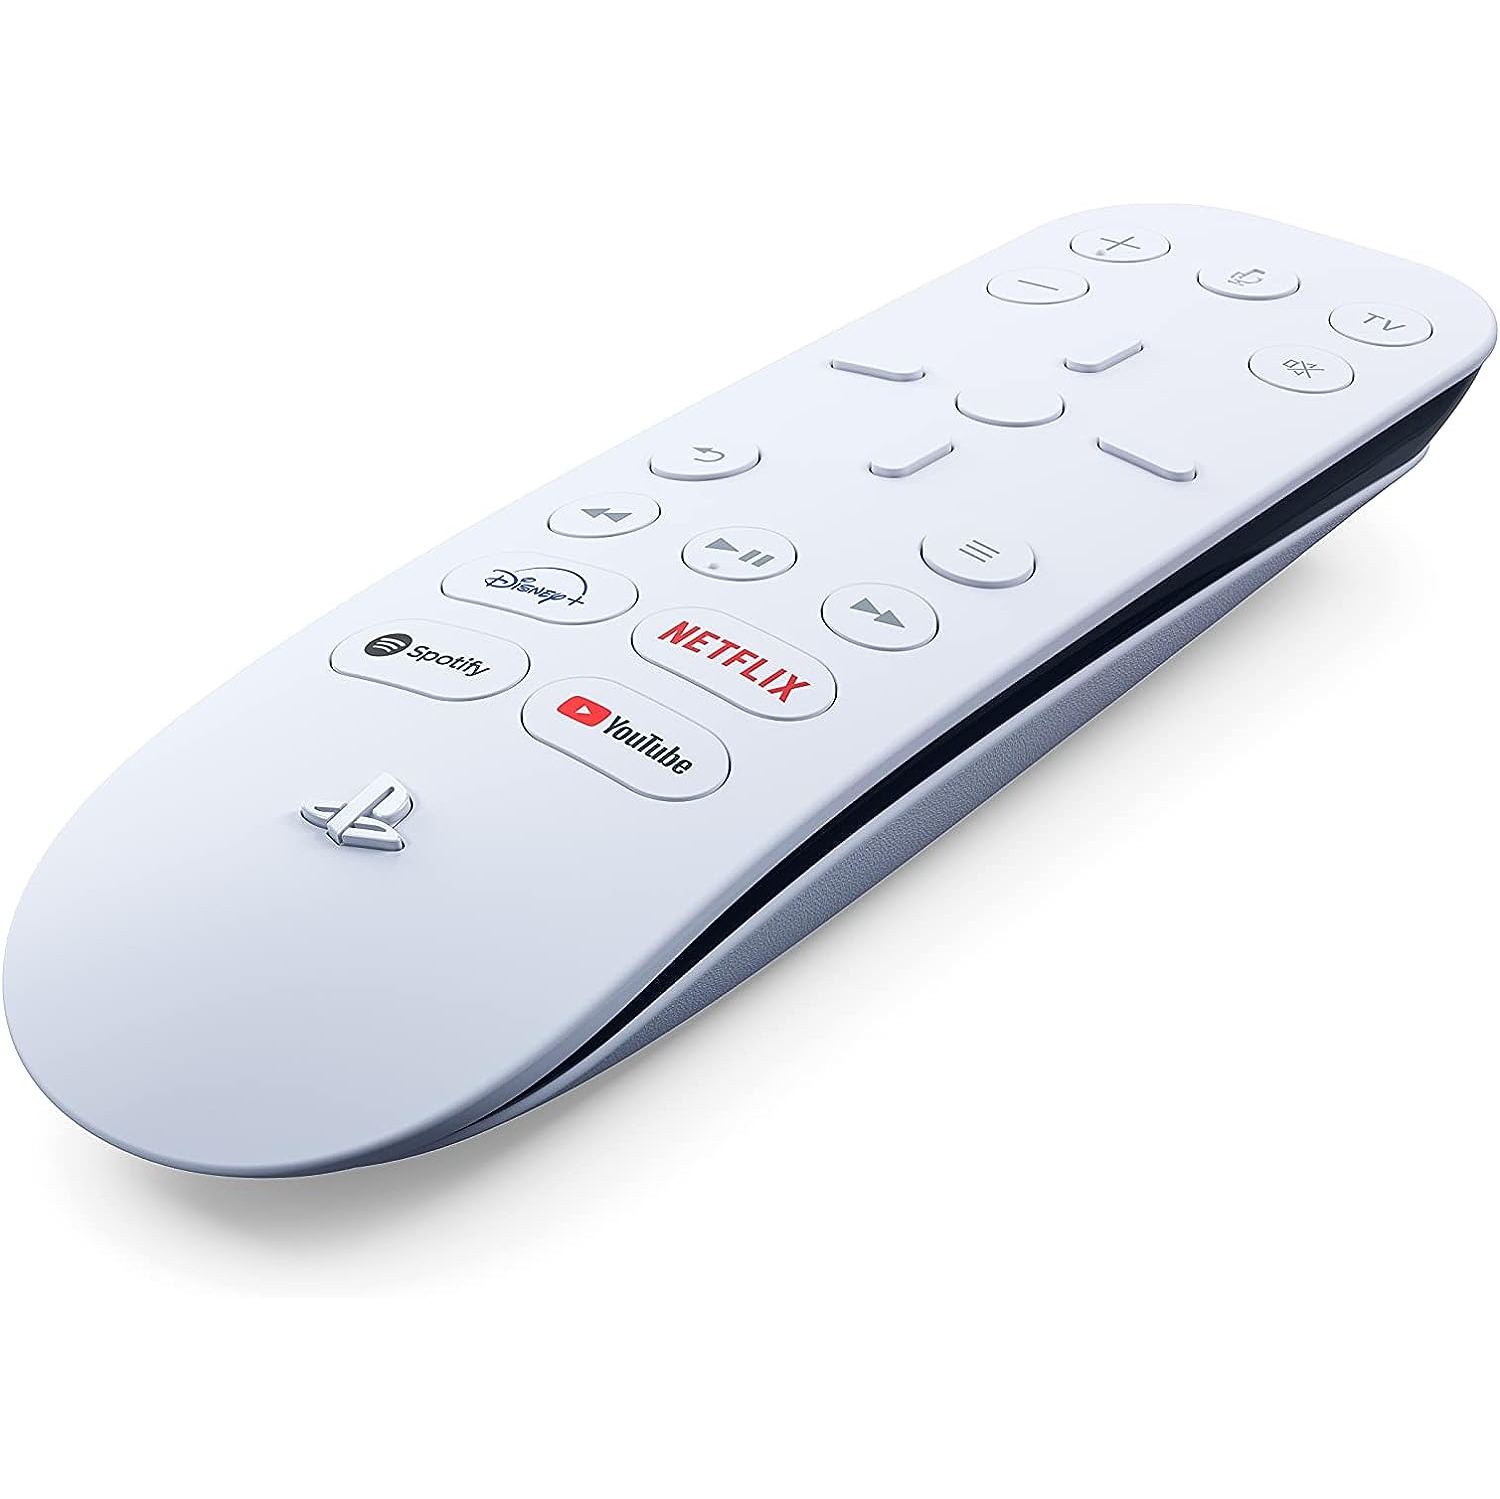 PlayStation 5 Media Remote Control - Brand New